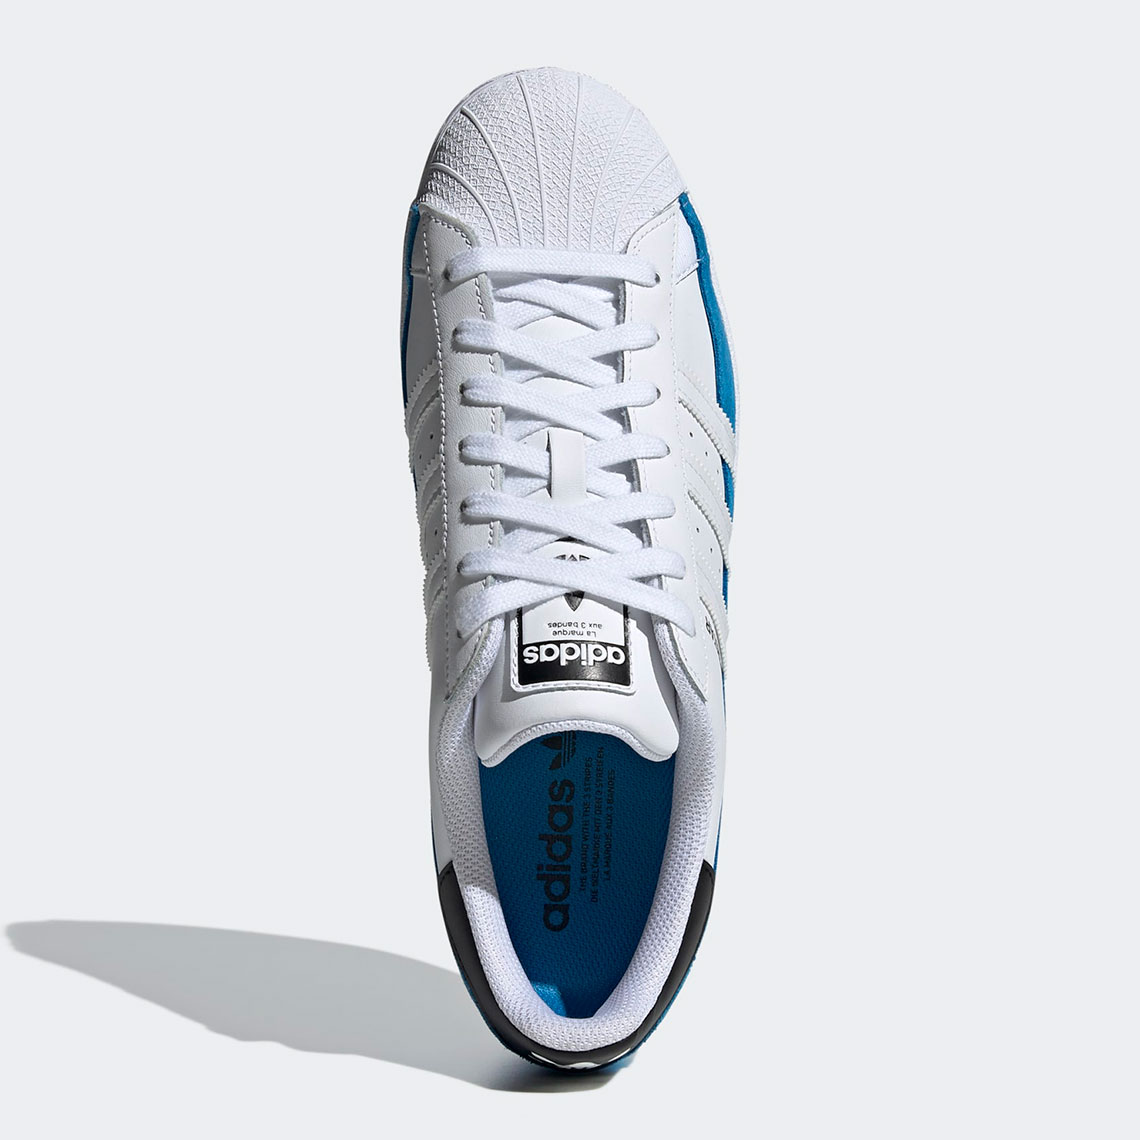 Adidas Superstar Bright Blue Fx5571 2